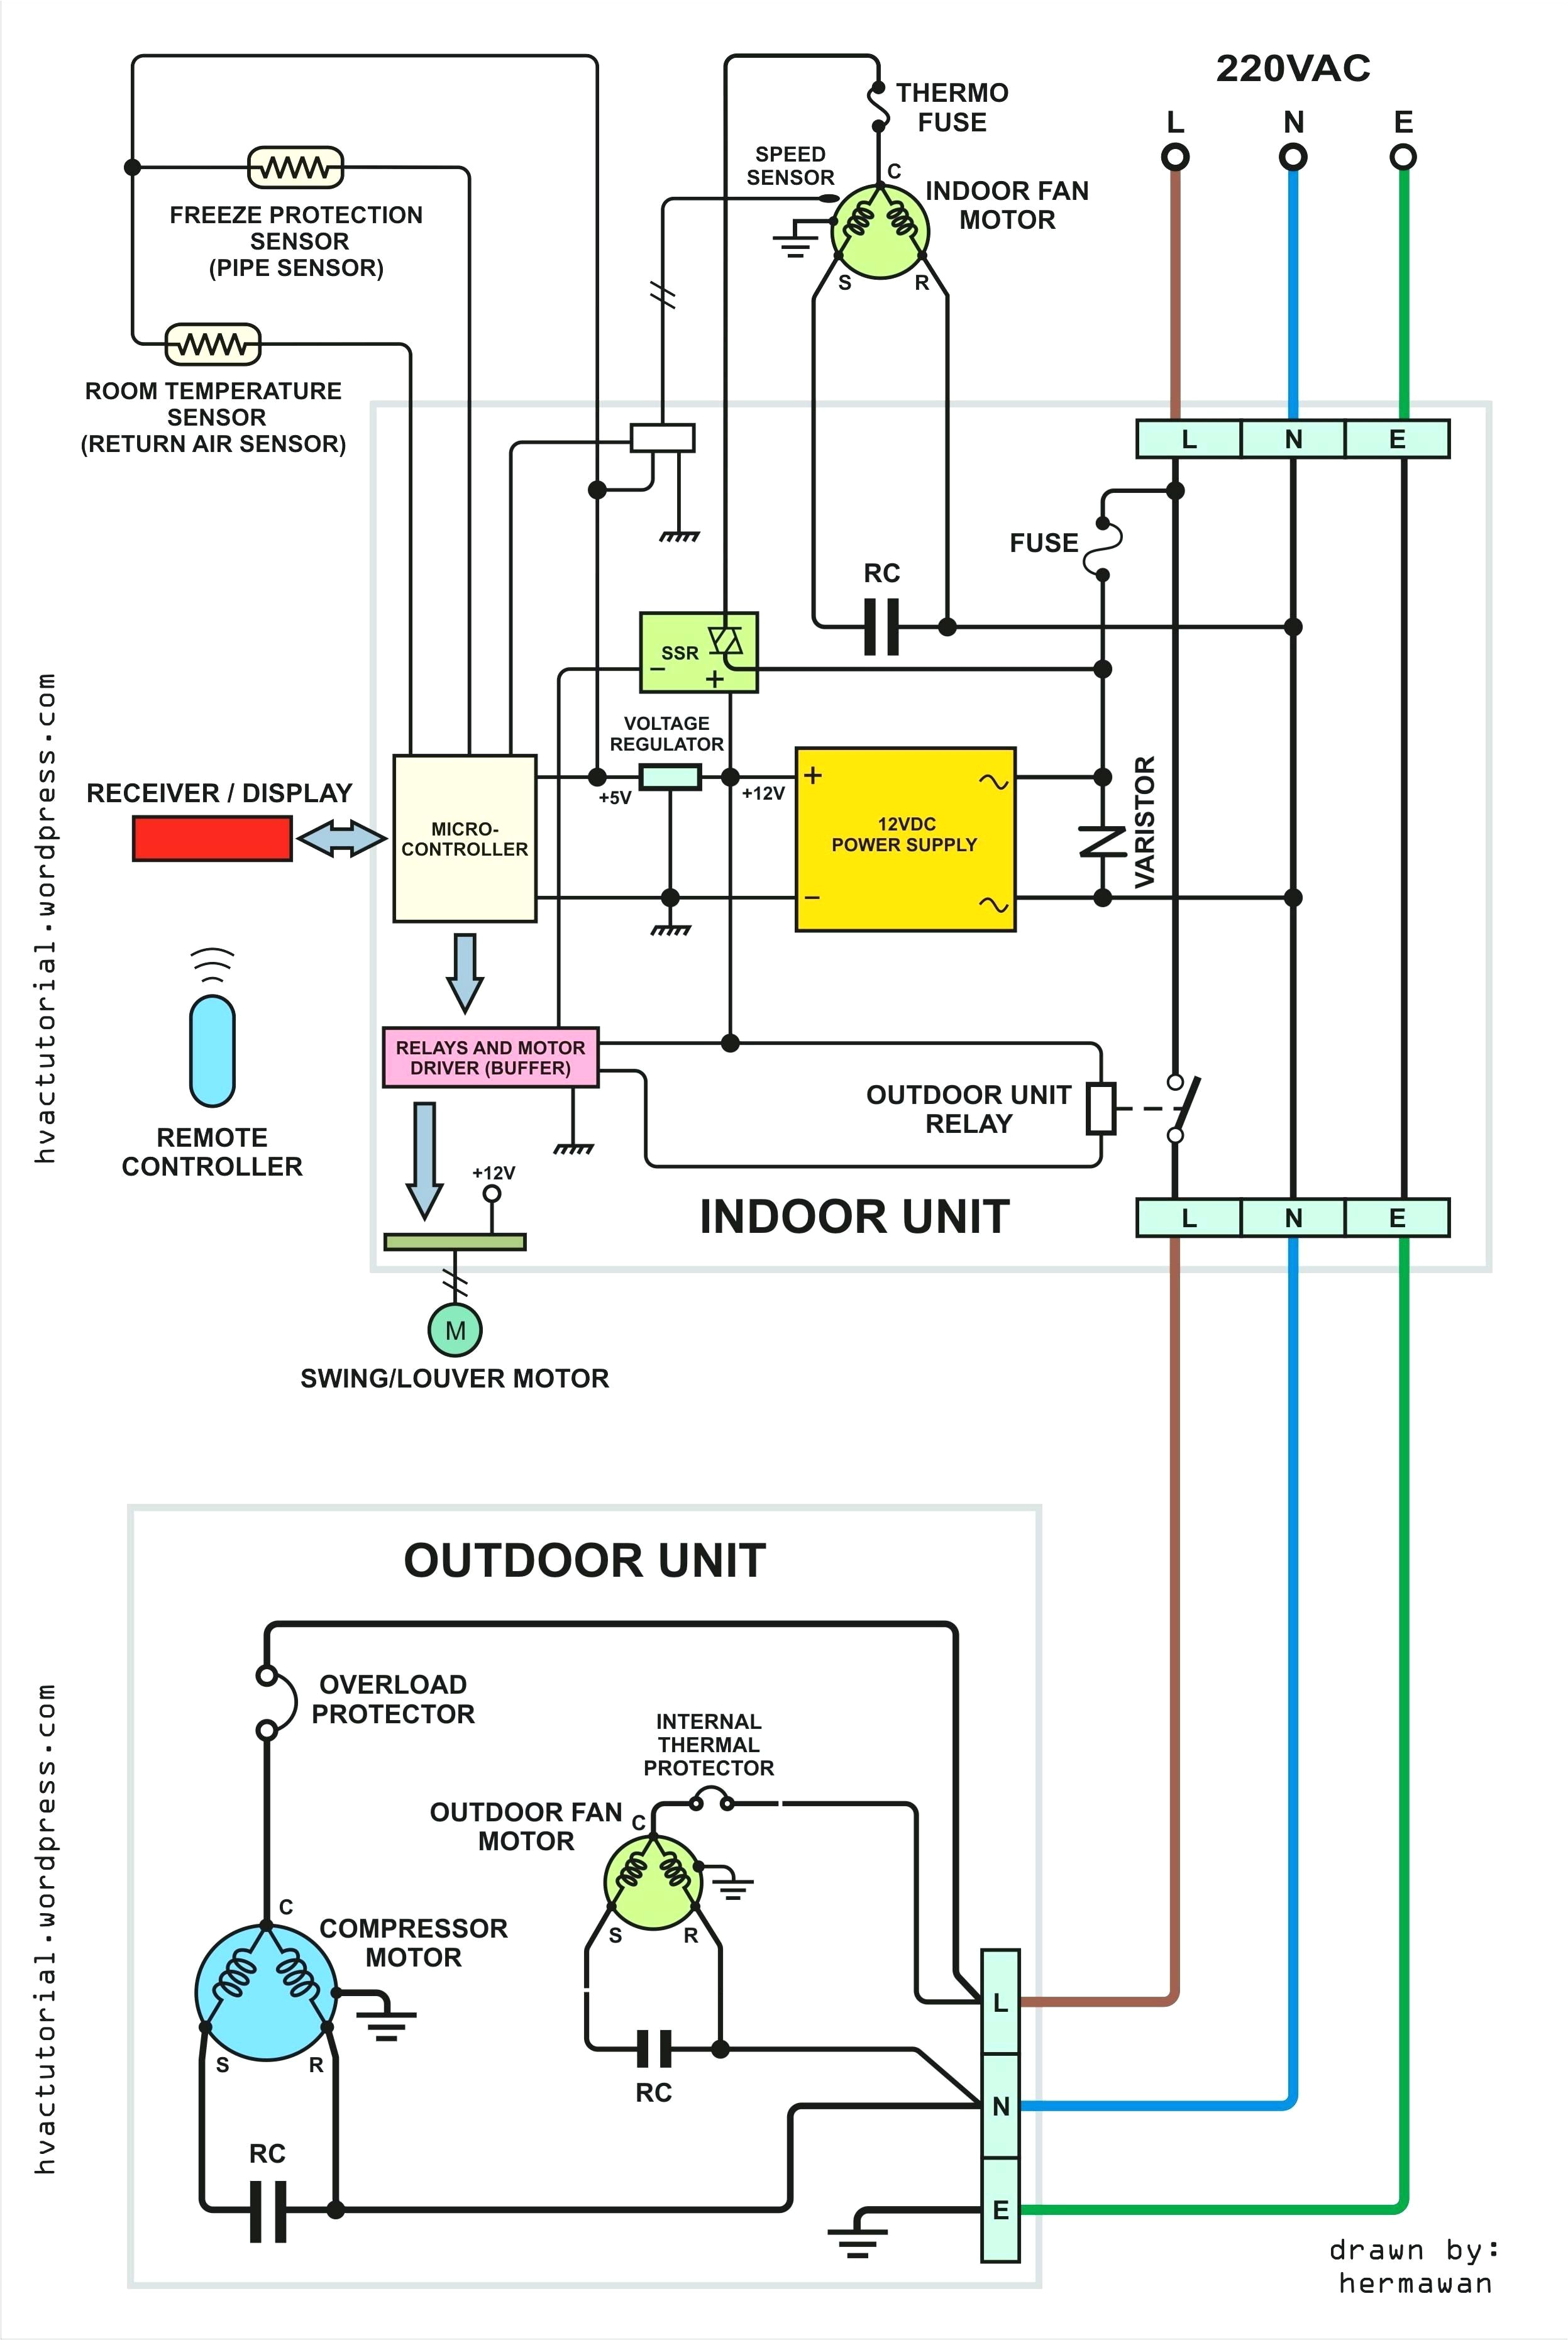 heating wiring diagram free download wiring diagram schematic ac disconnect wiring diagram free download schematic